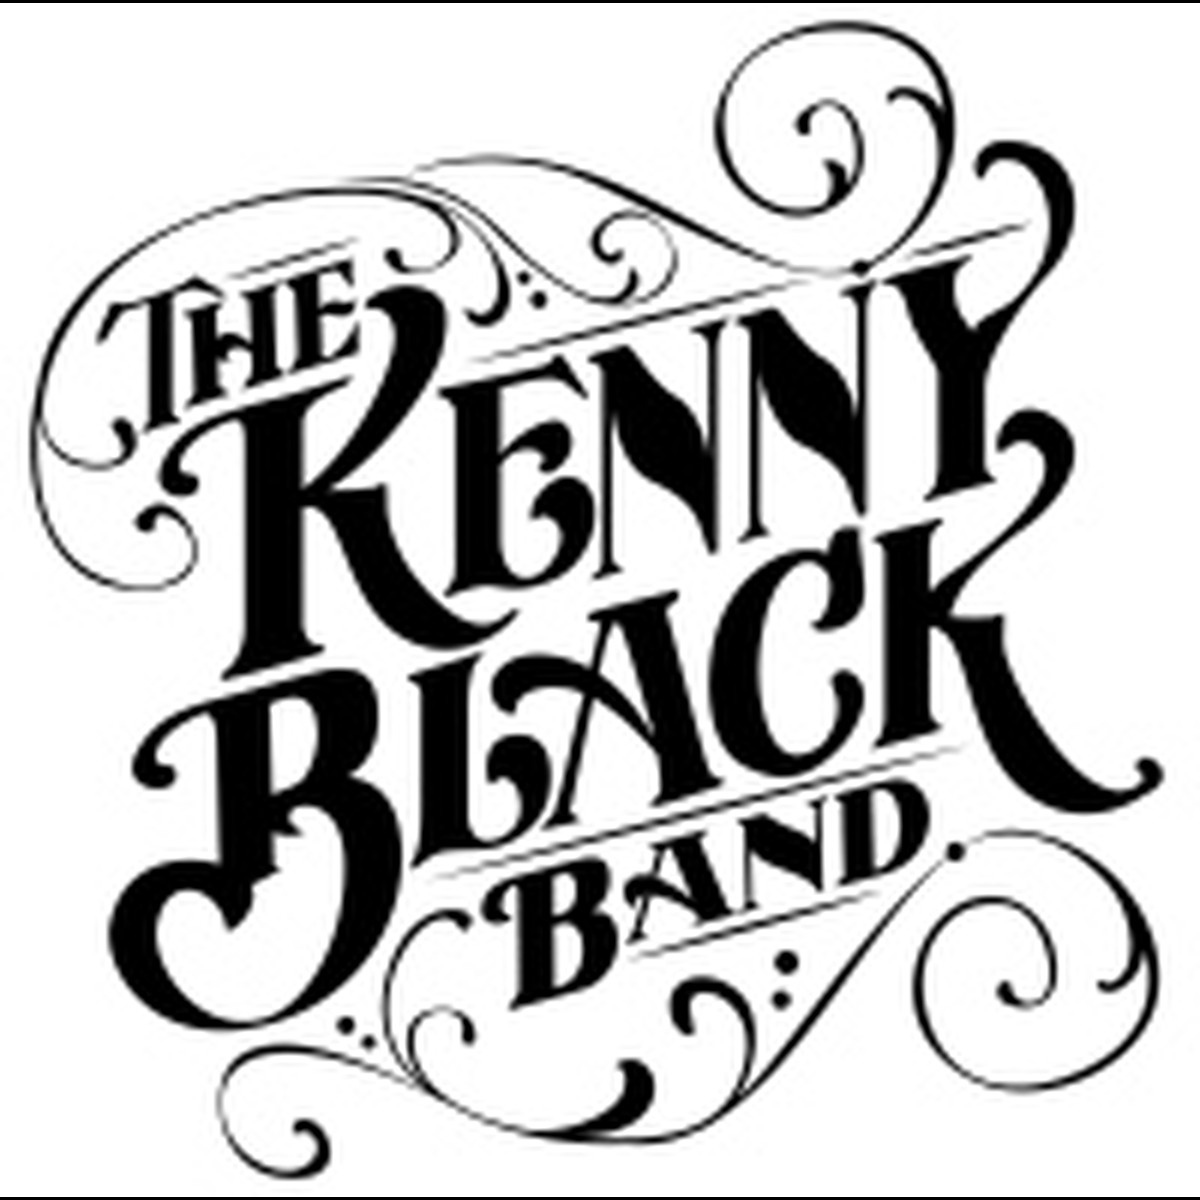 The Kenny Black Band Official ザ ケニーブラック バンド オフィシャル